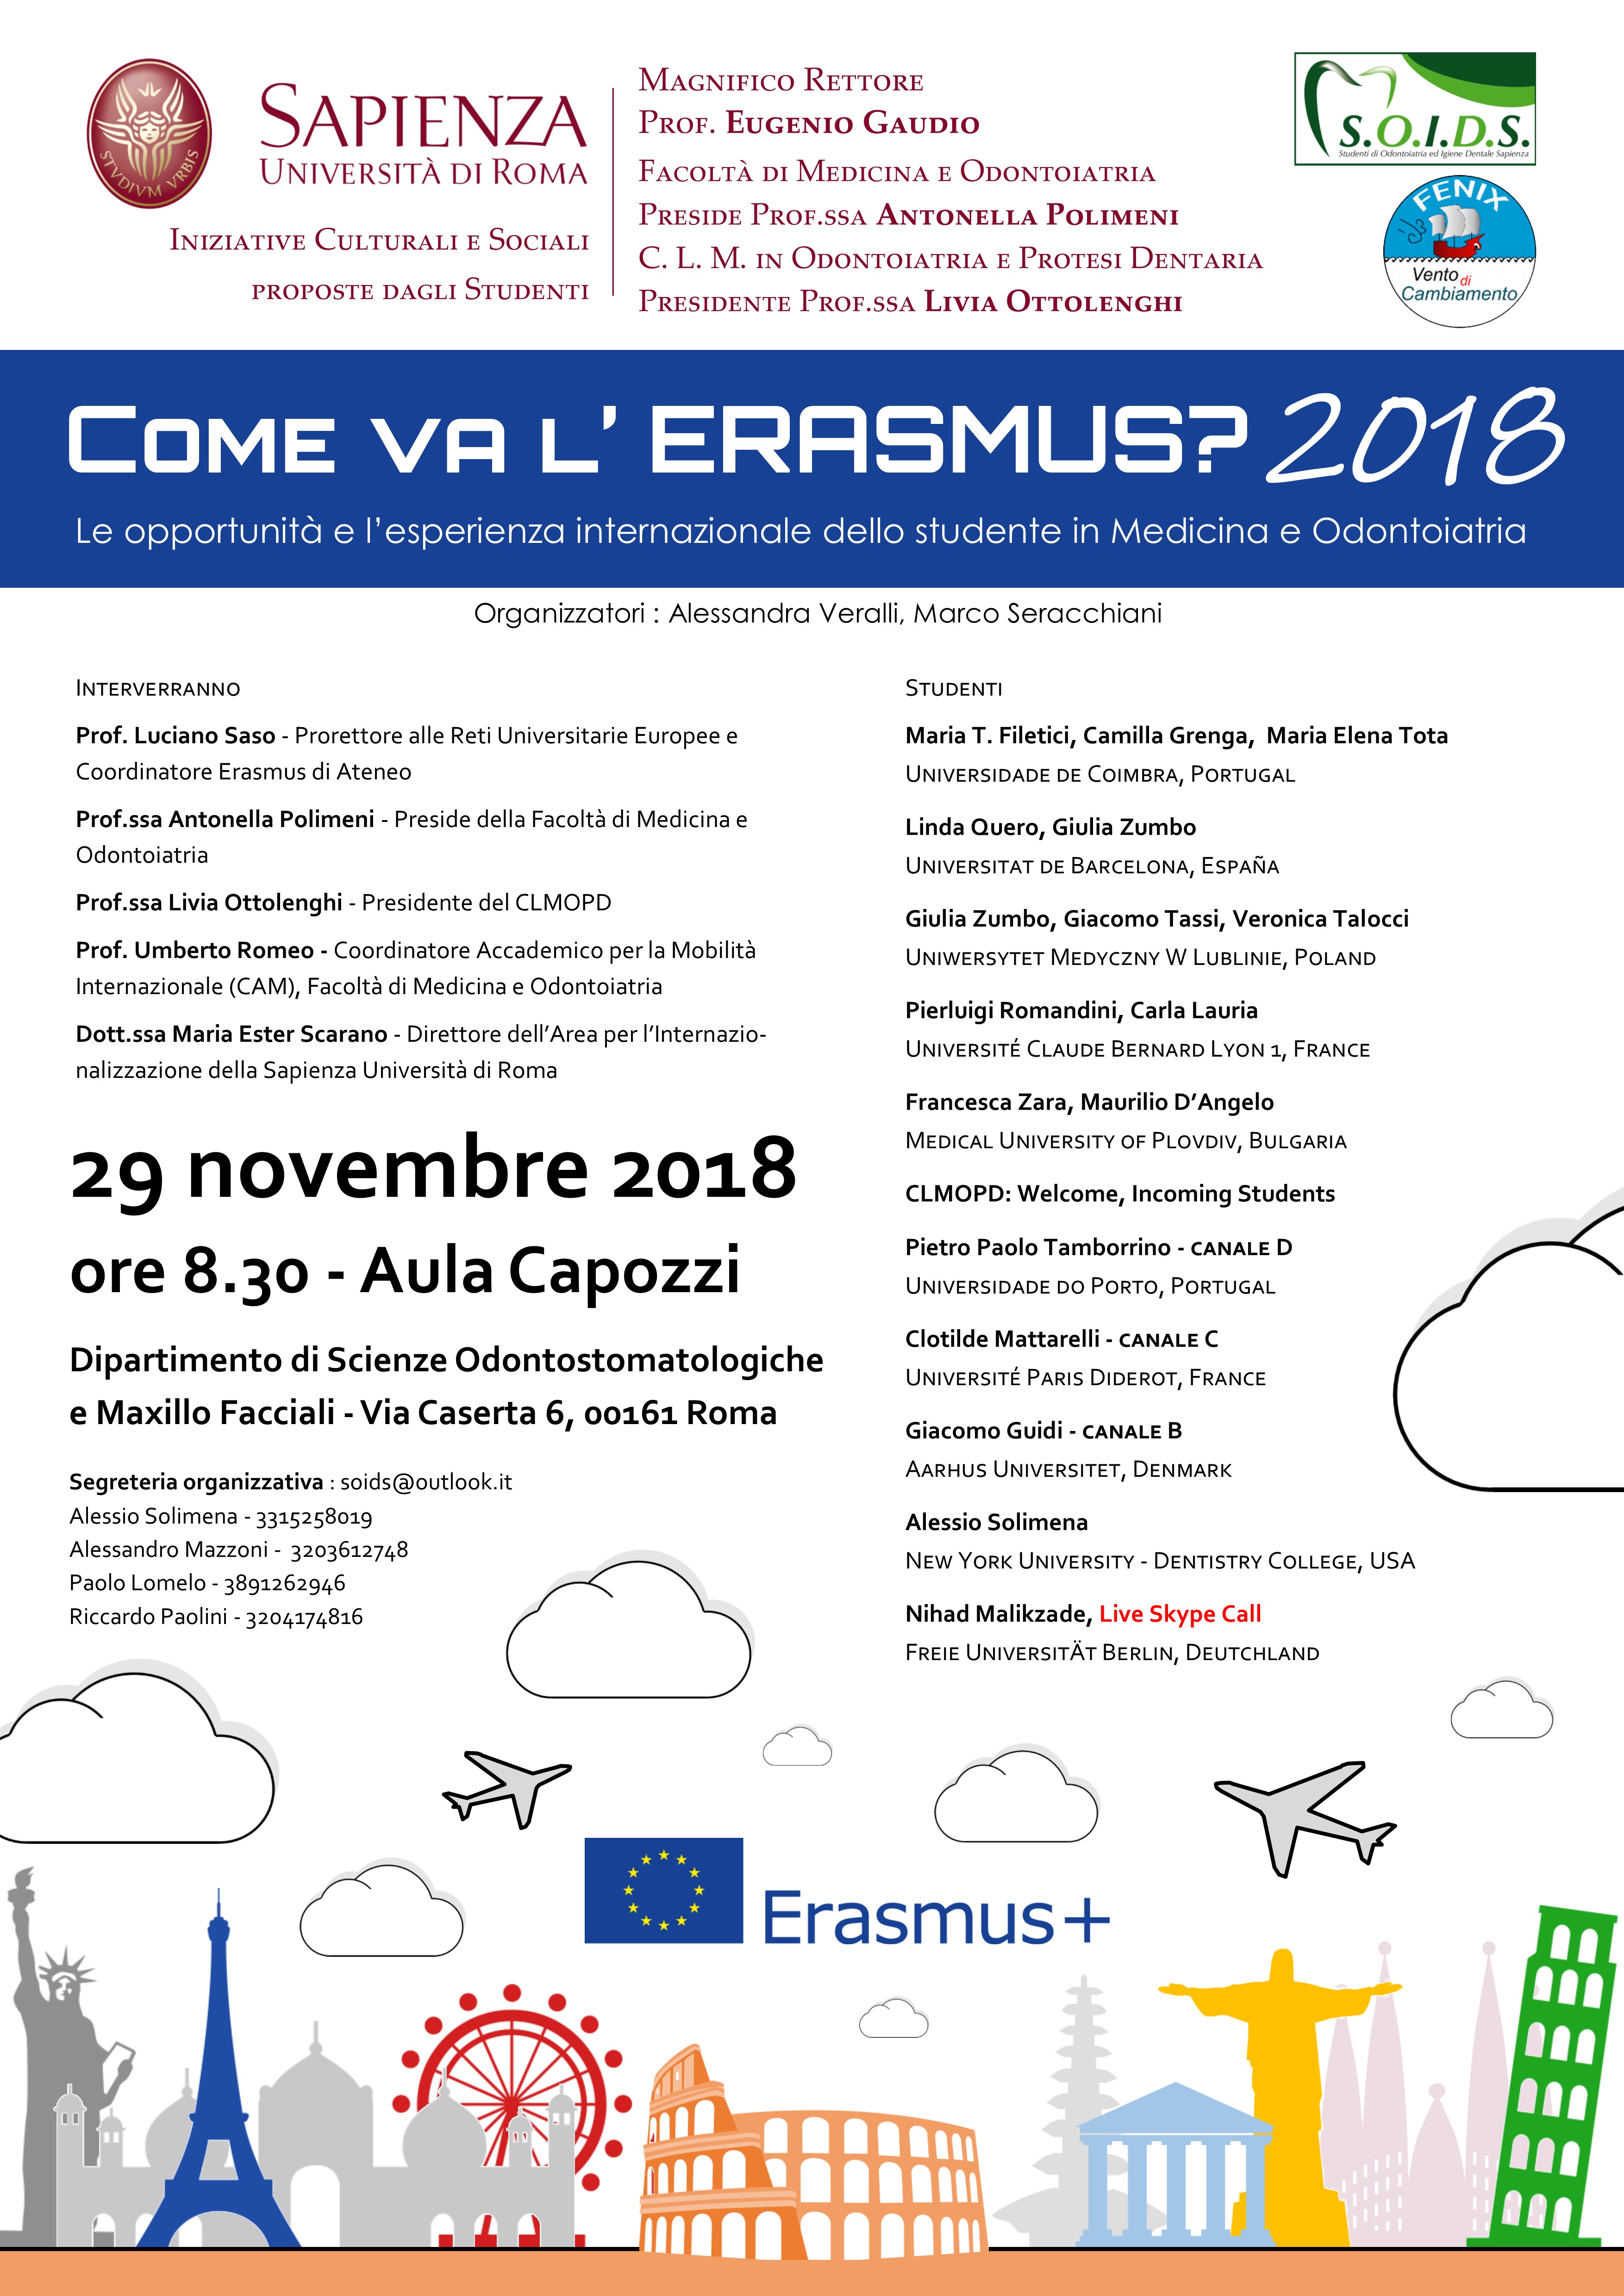 Attachment Come va lErasmus 2018 - Locandina (1).jpg